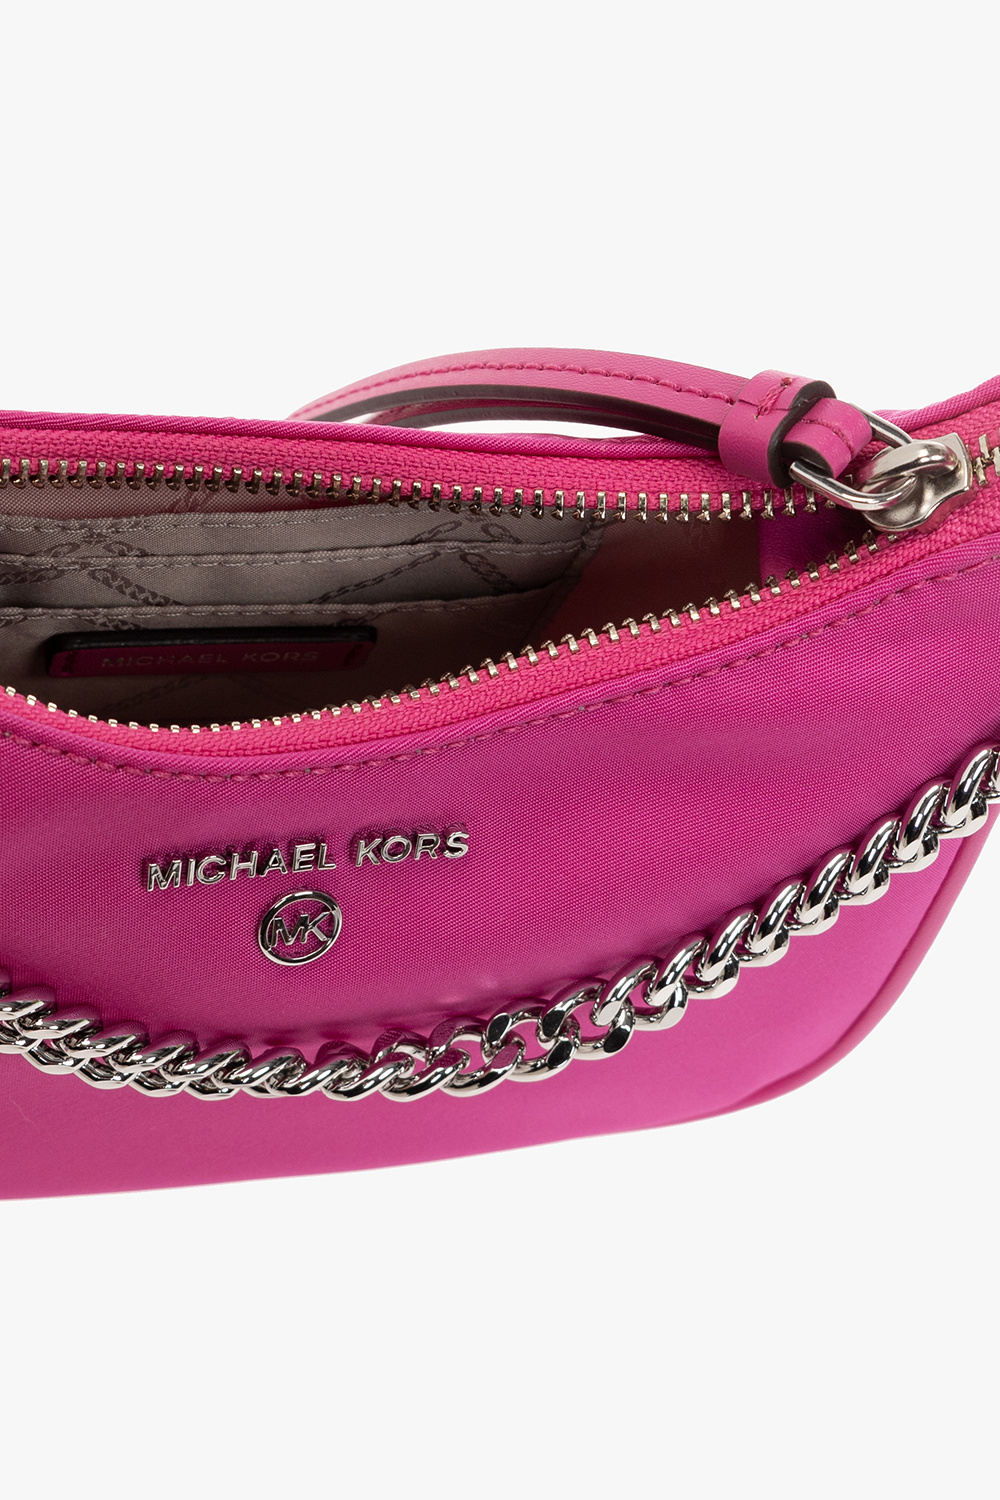 StclaircomoShops | Women's Bags spade | Michael Michael Kors 'Jet Set Charm  Small' handbag | Belay Iridescent leather crossbody bag